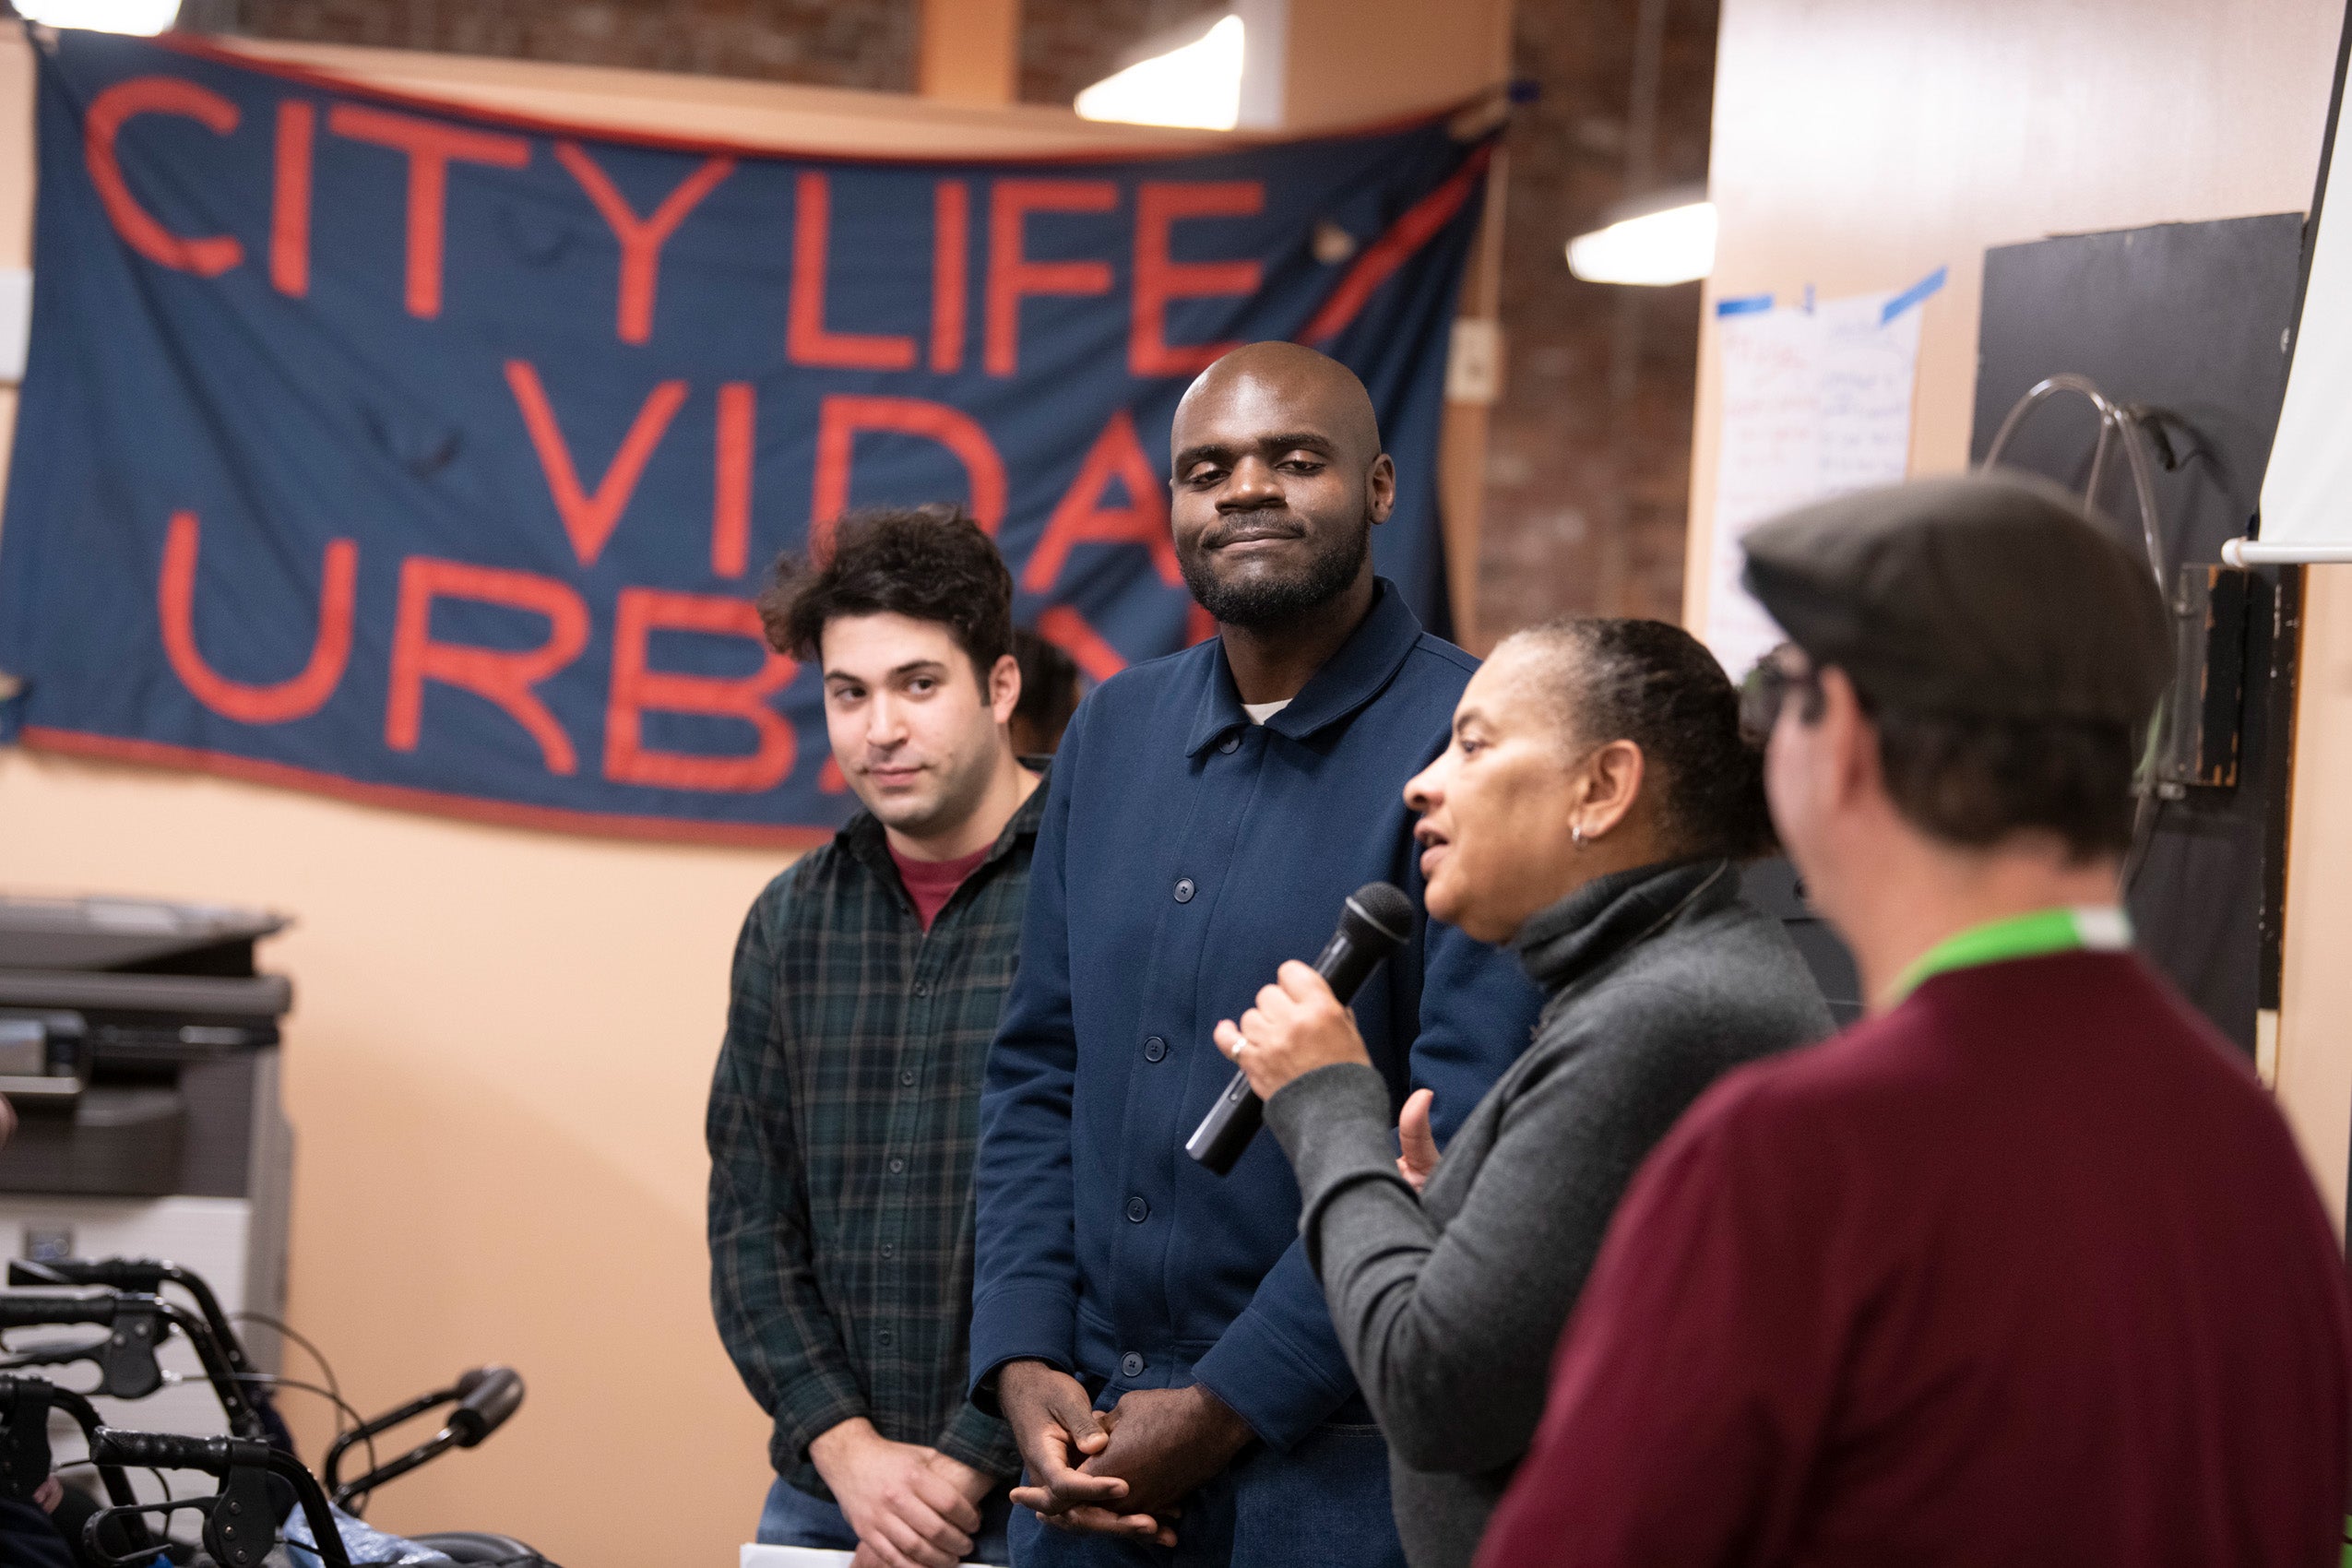 Image of four people presenting at the City Life Vida Urbana